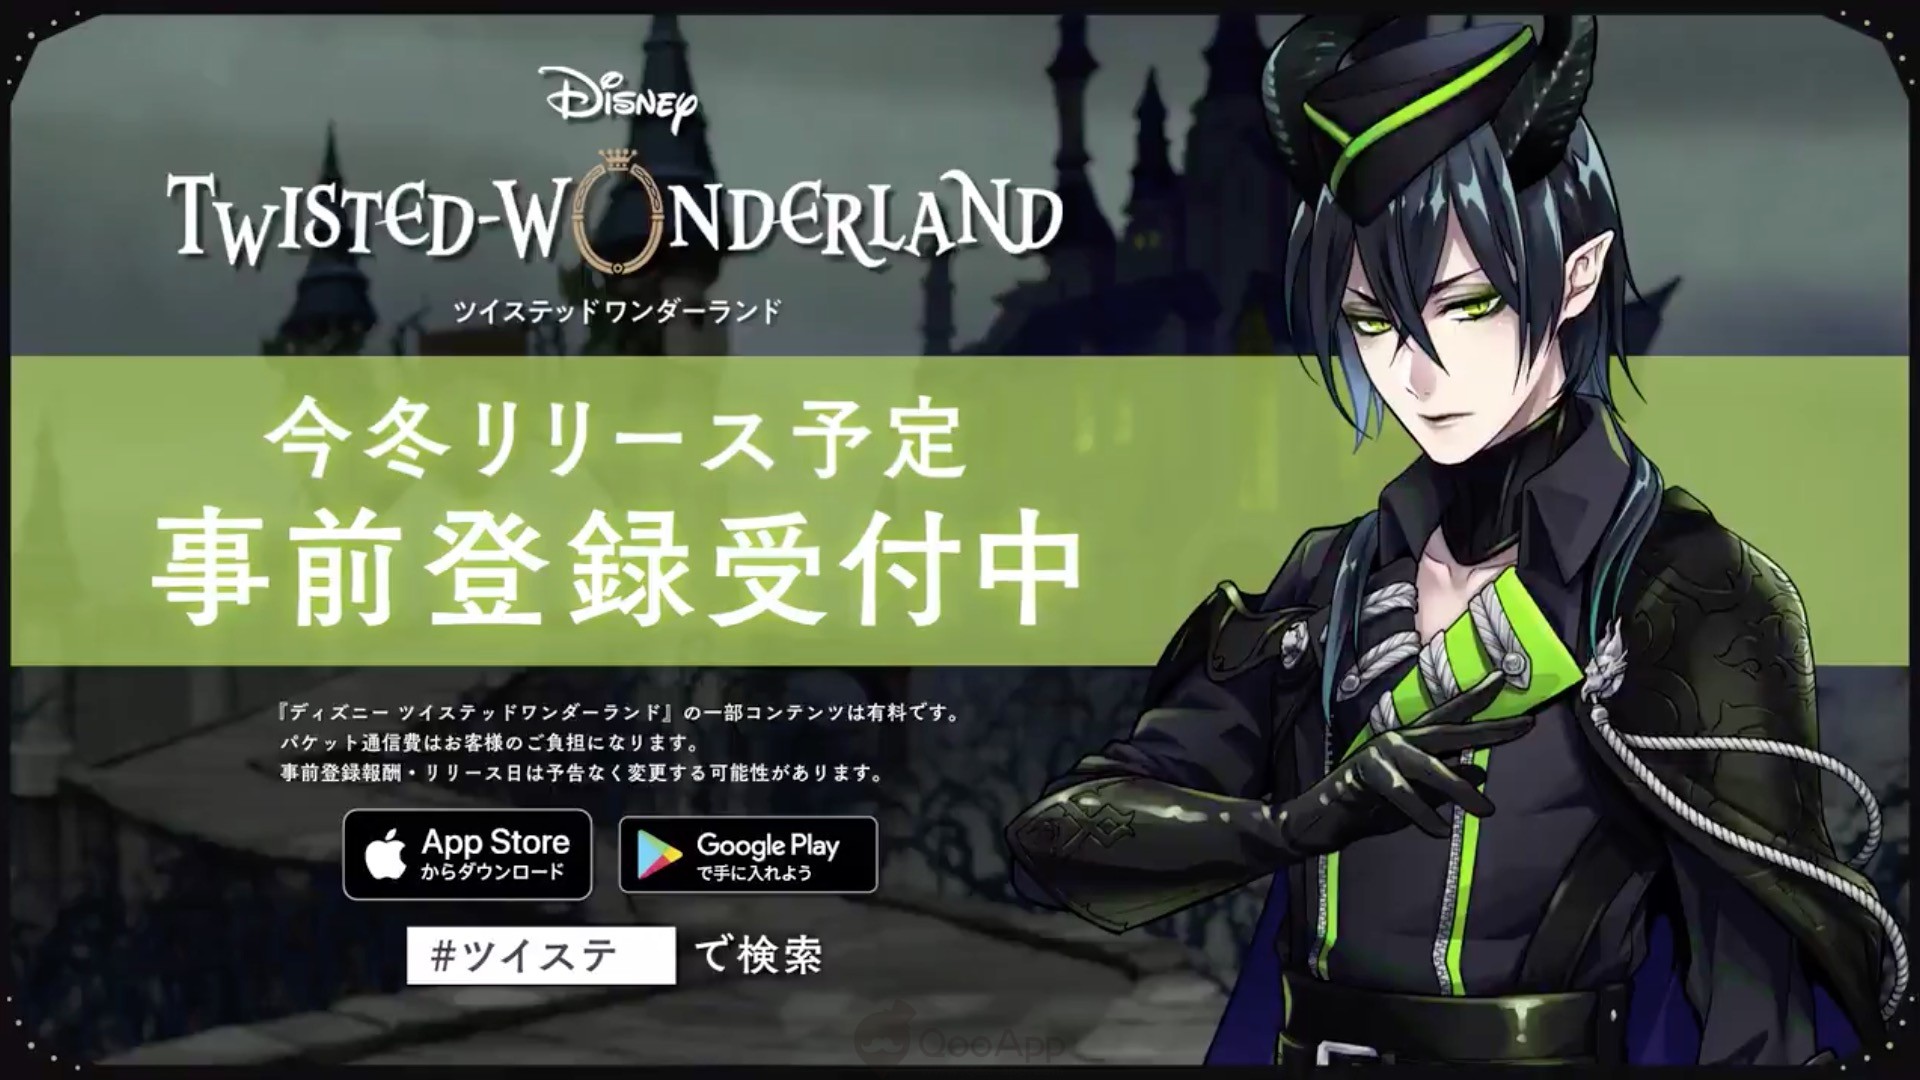 Disney Twisted-Wonderland - Apps on Google Play